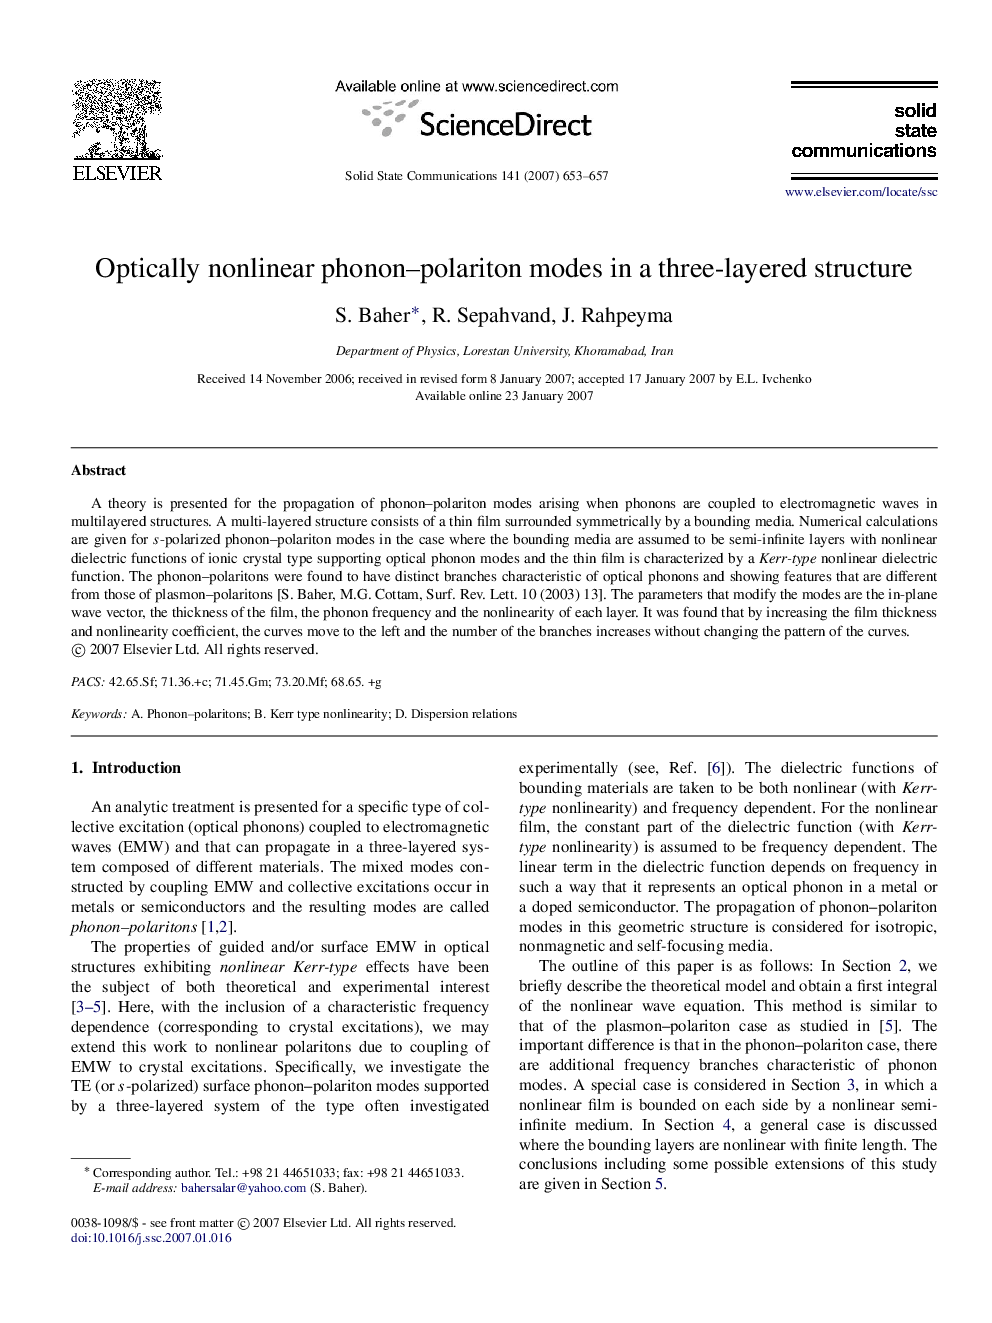 Optically nonlinear phonon-polariton modes in a three-layered structure